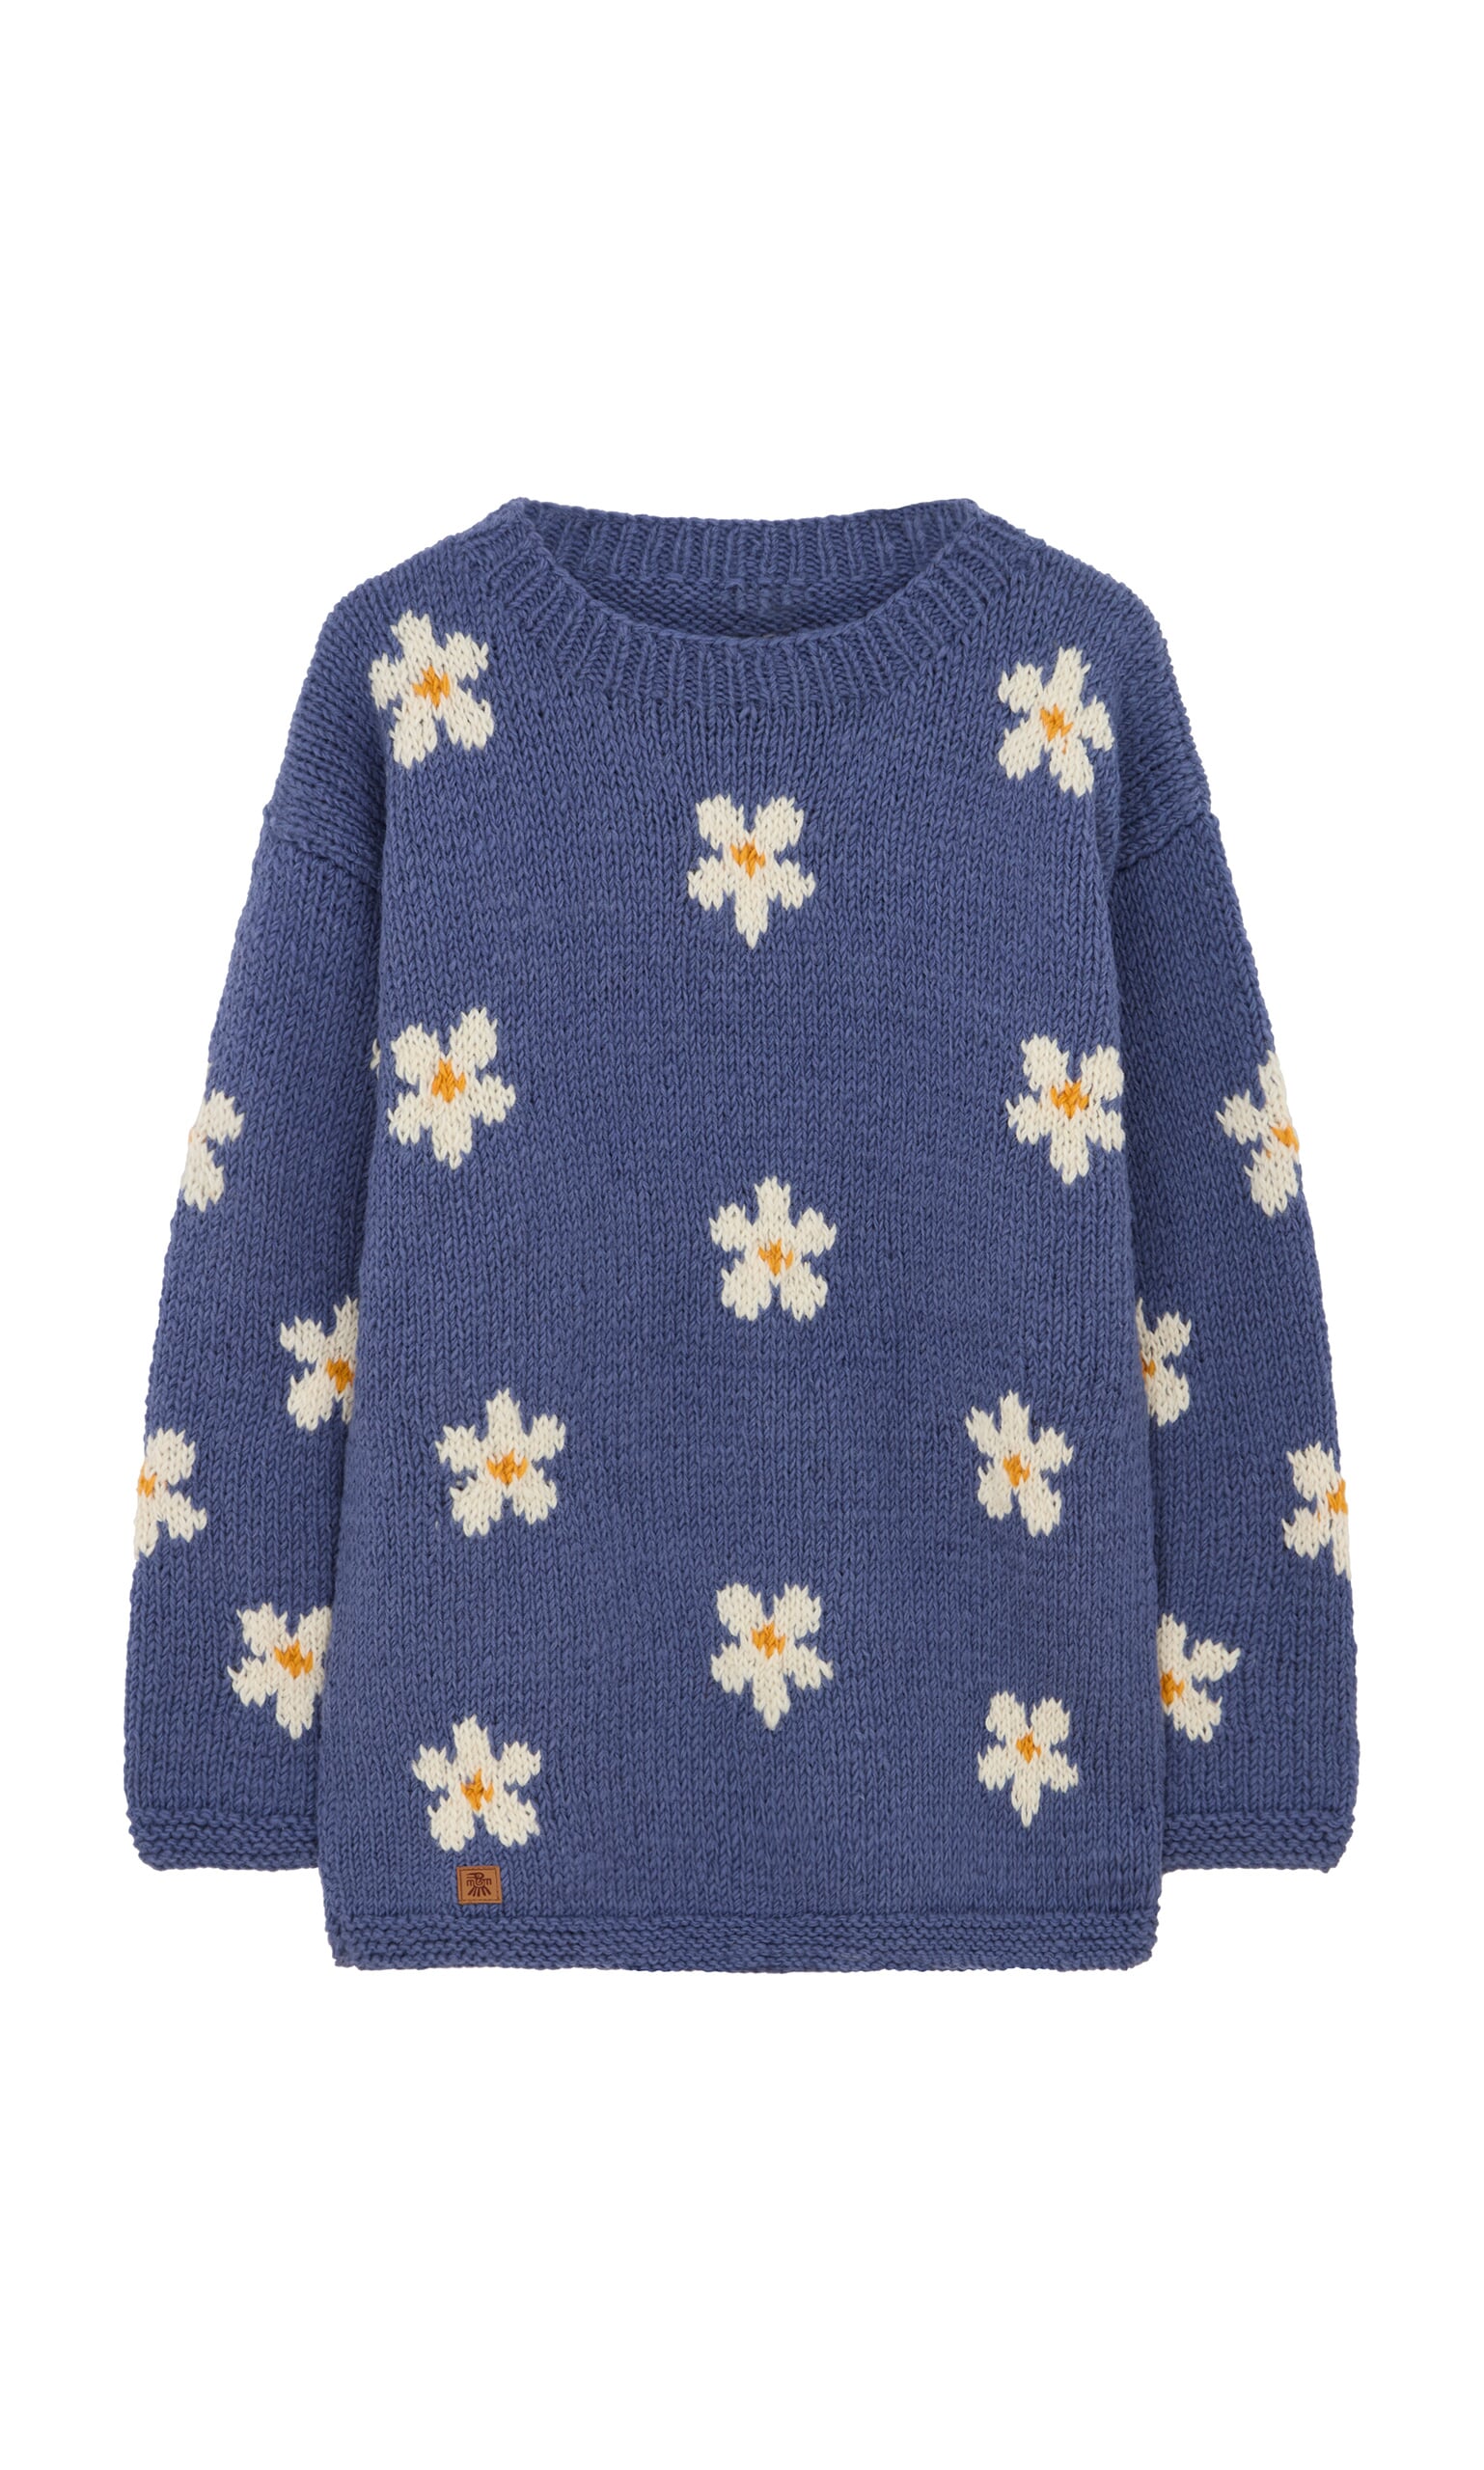 Blue Daisy Sweater - Plümo Ltd